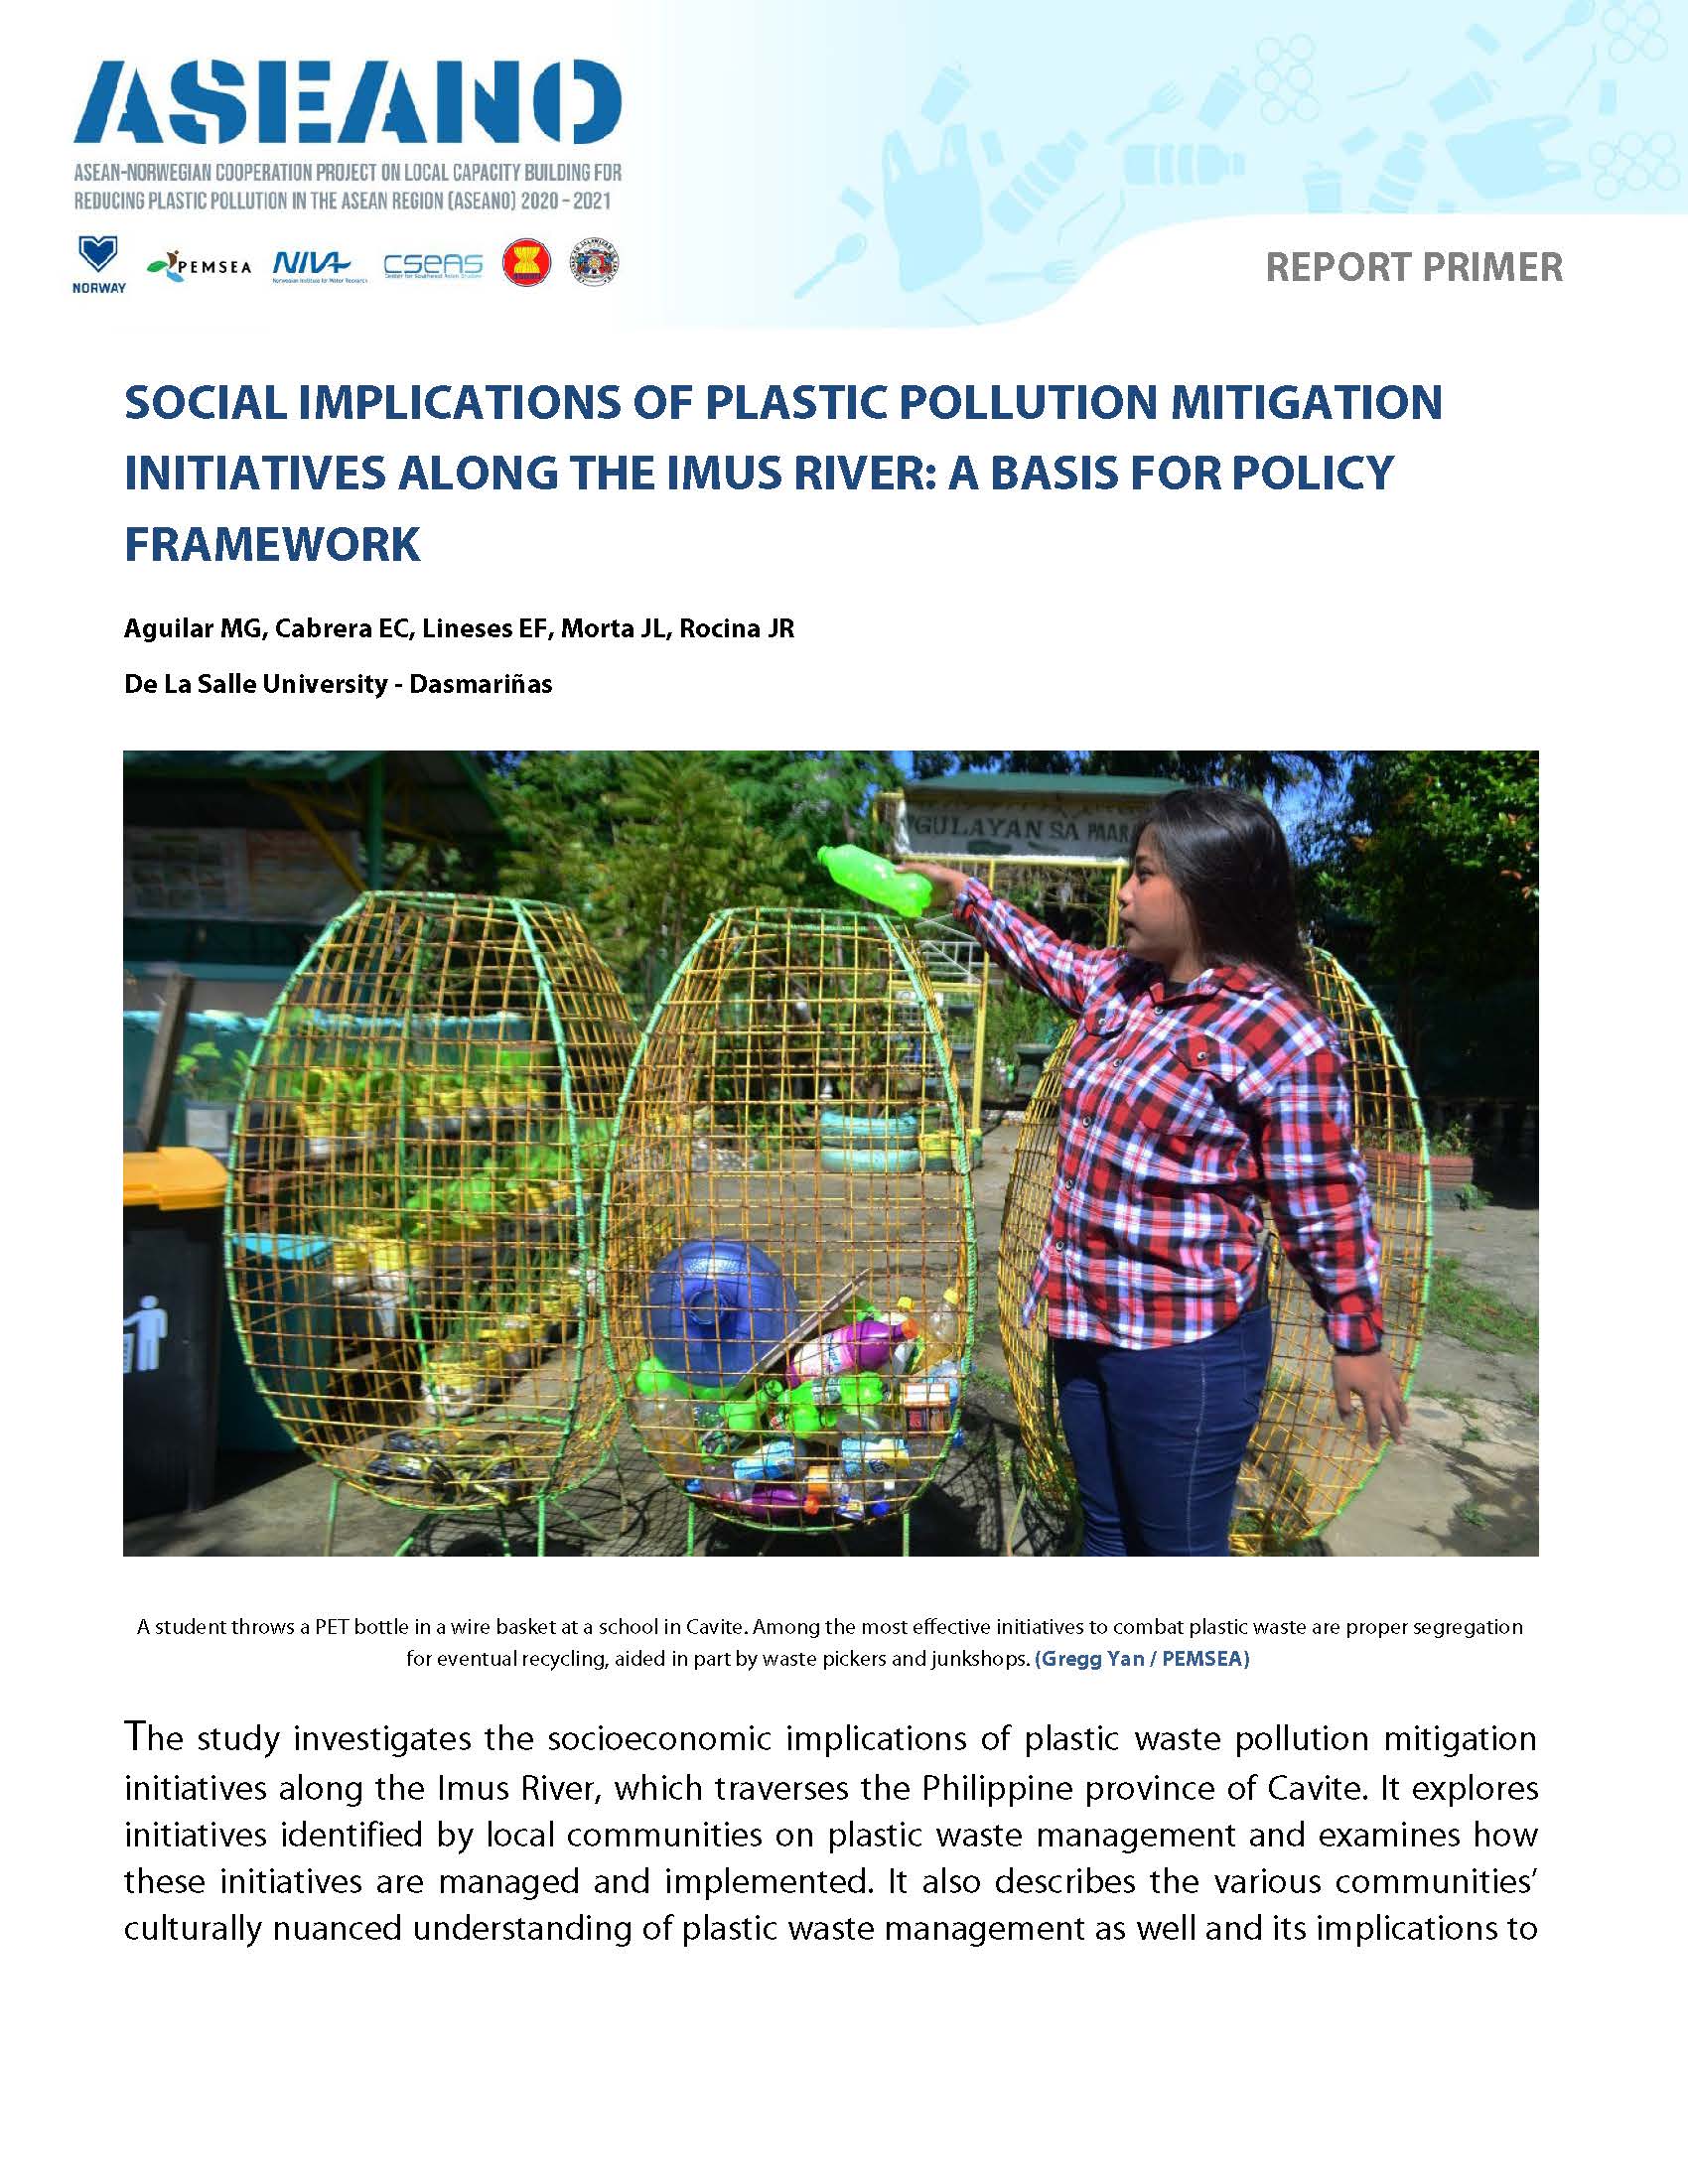 ASEANO Subproject 3 Primer - Social Implications of Mitigation